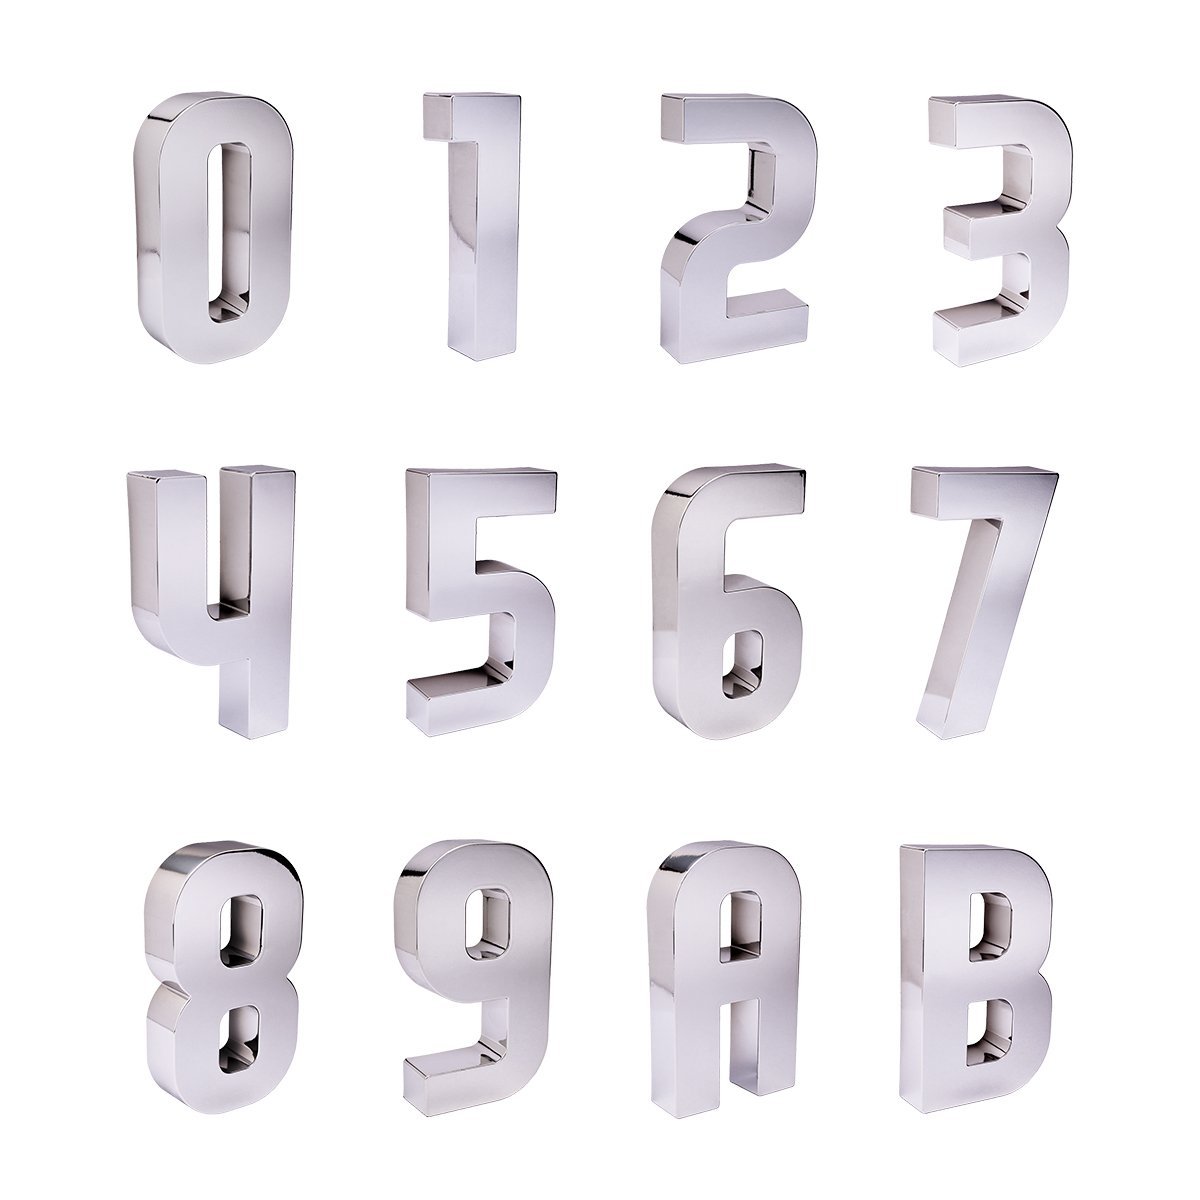 Números e Letras Residenciais / Comerciais Cromado 3D 19cm:B - 2